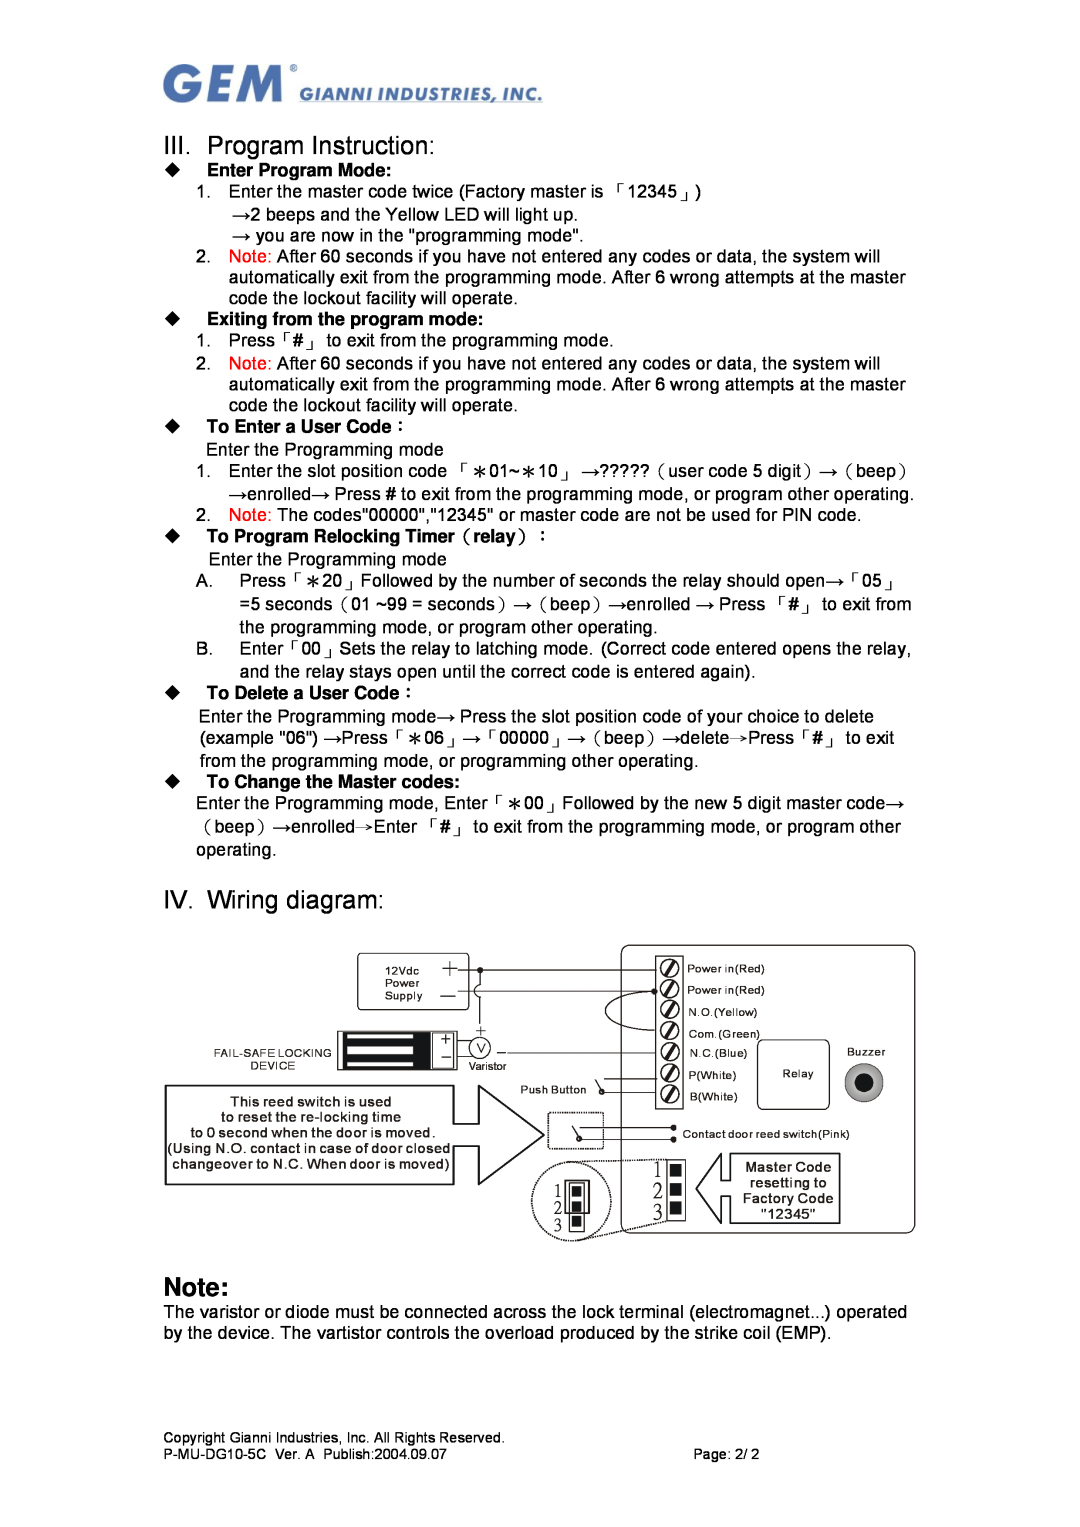 Gianni Industries DG-11 (Mount) specifications III. Program Instruction, IV. Wiring diagram, ‹ Enter Program Mode 